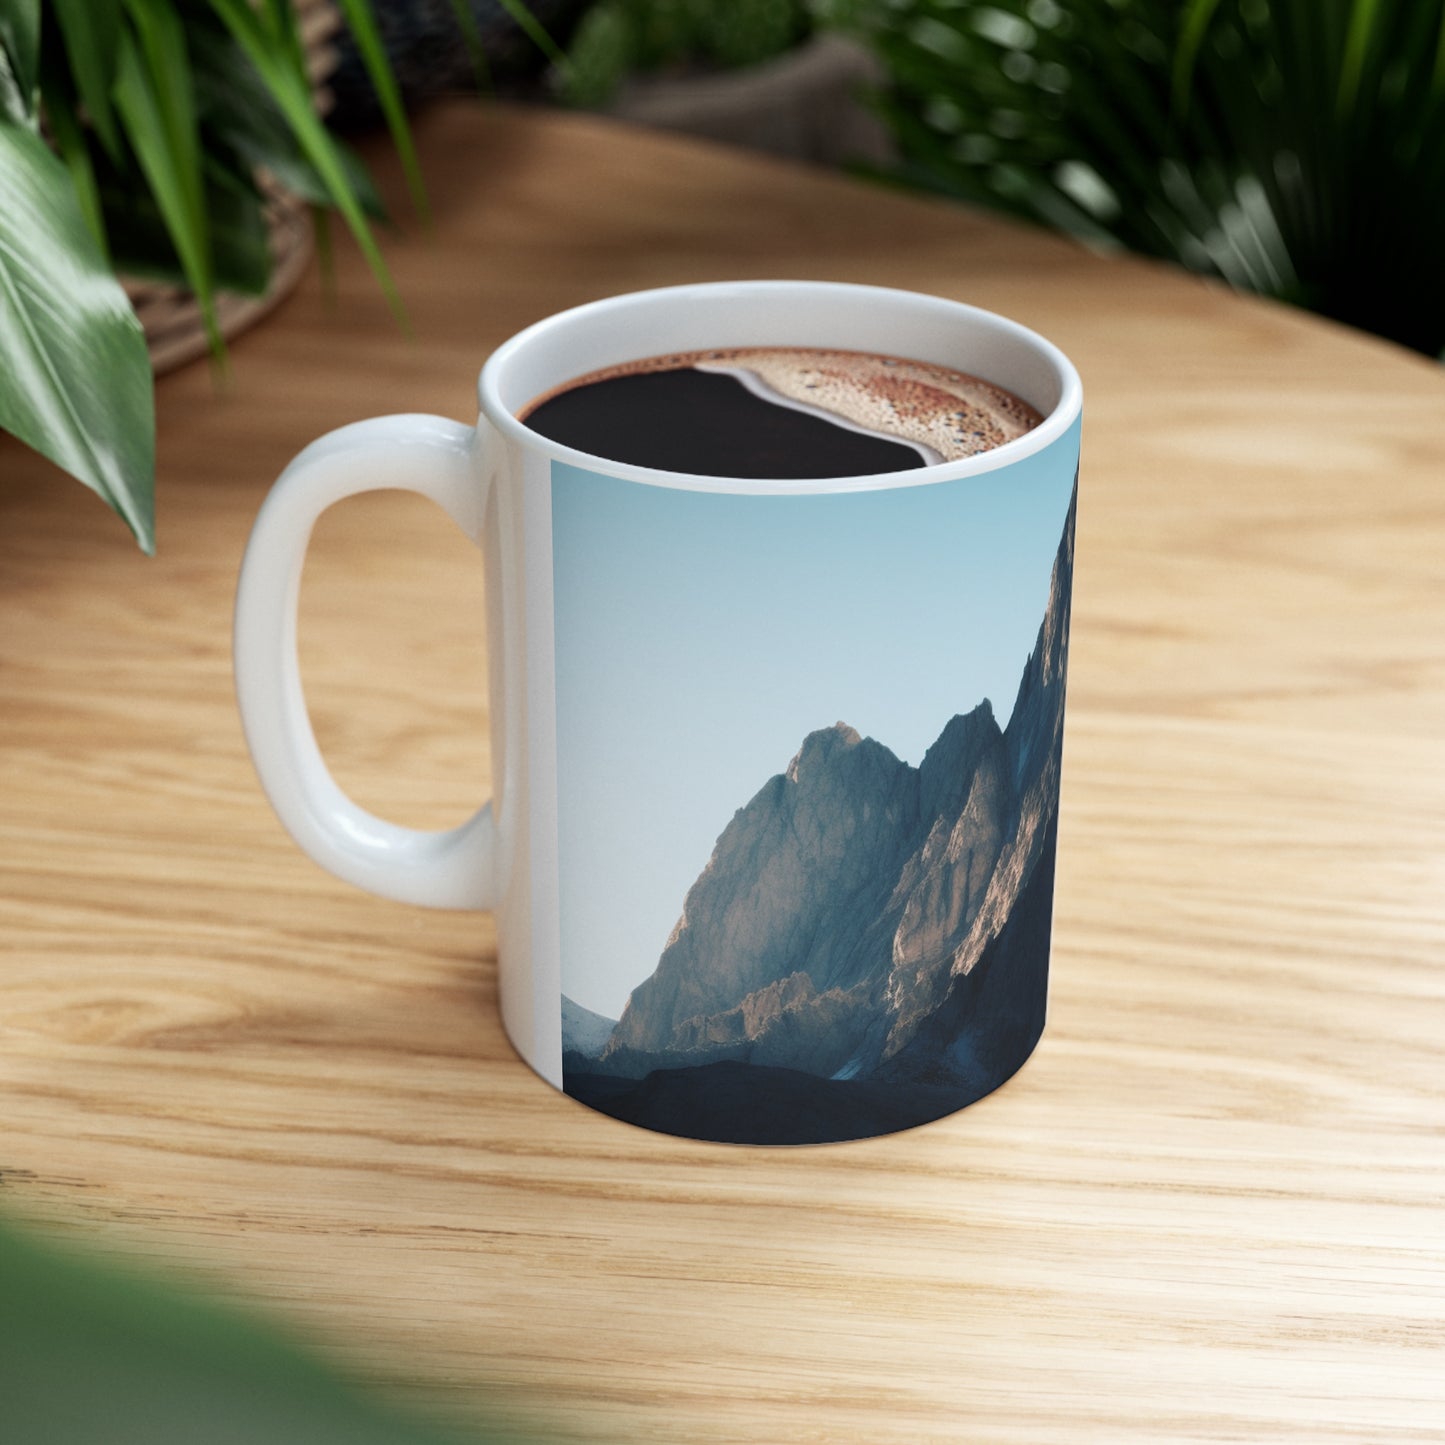 Beautiful Mountains Mug Design.Unique Gift for Her/Him.Customized Mug Design.